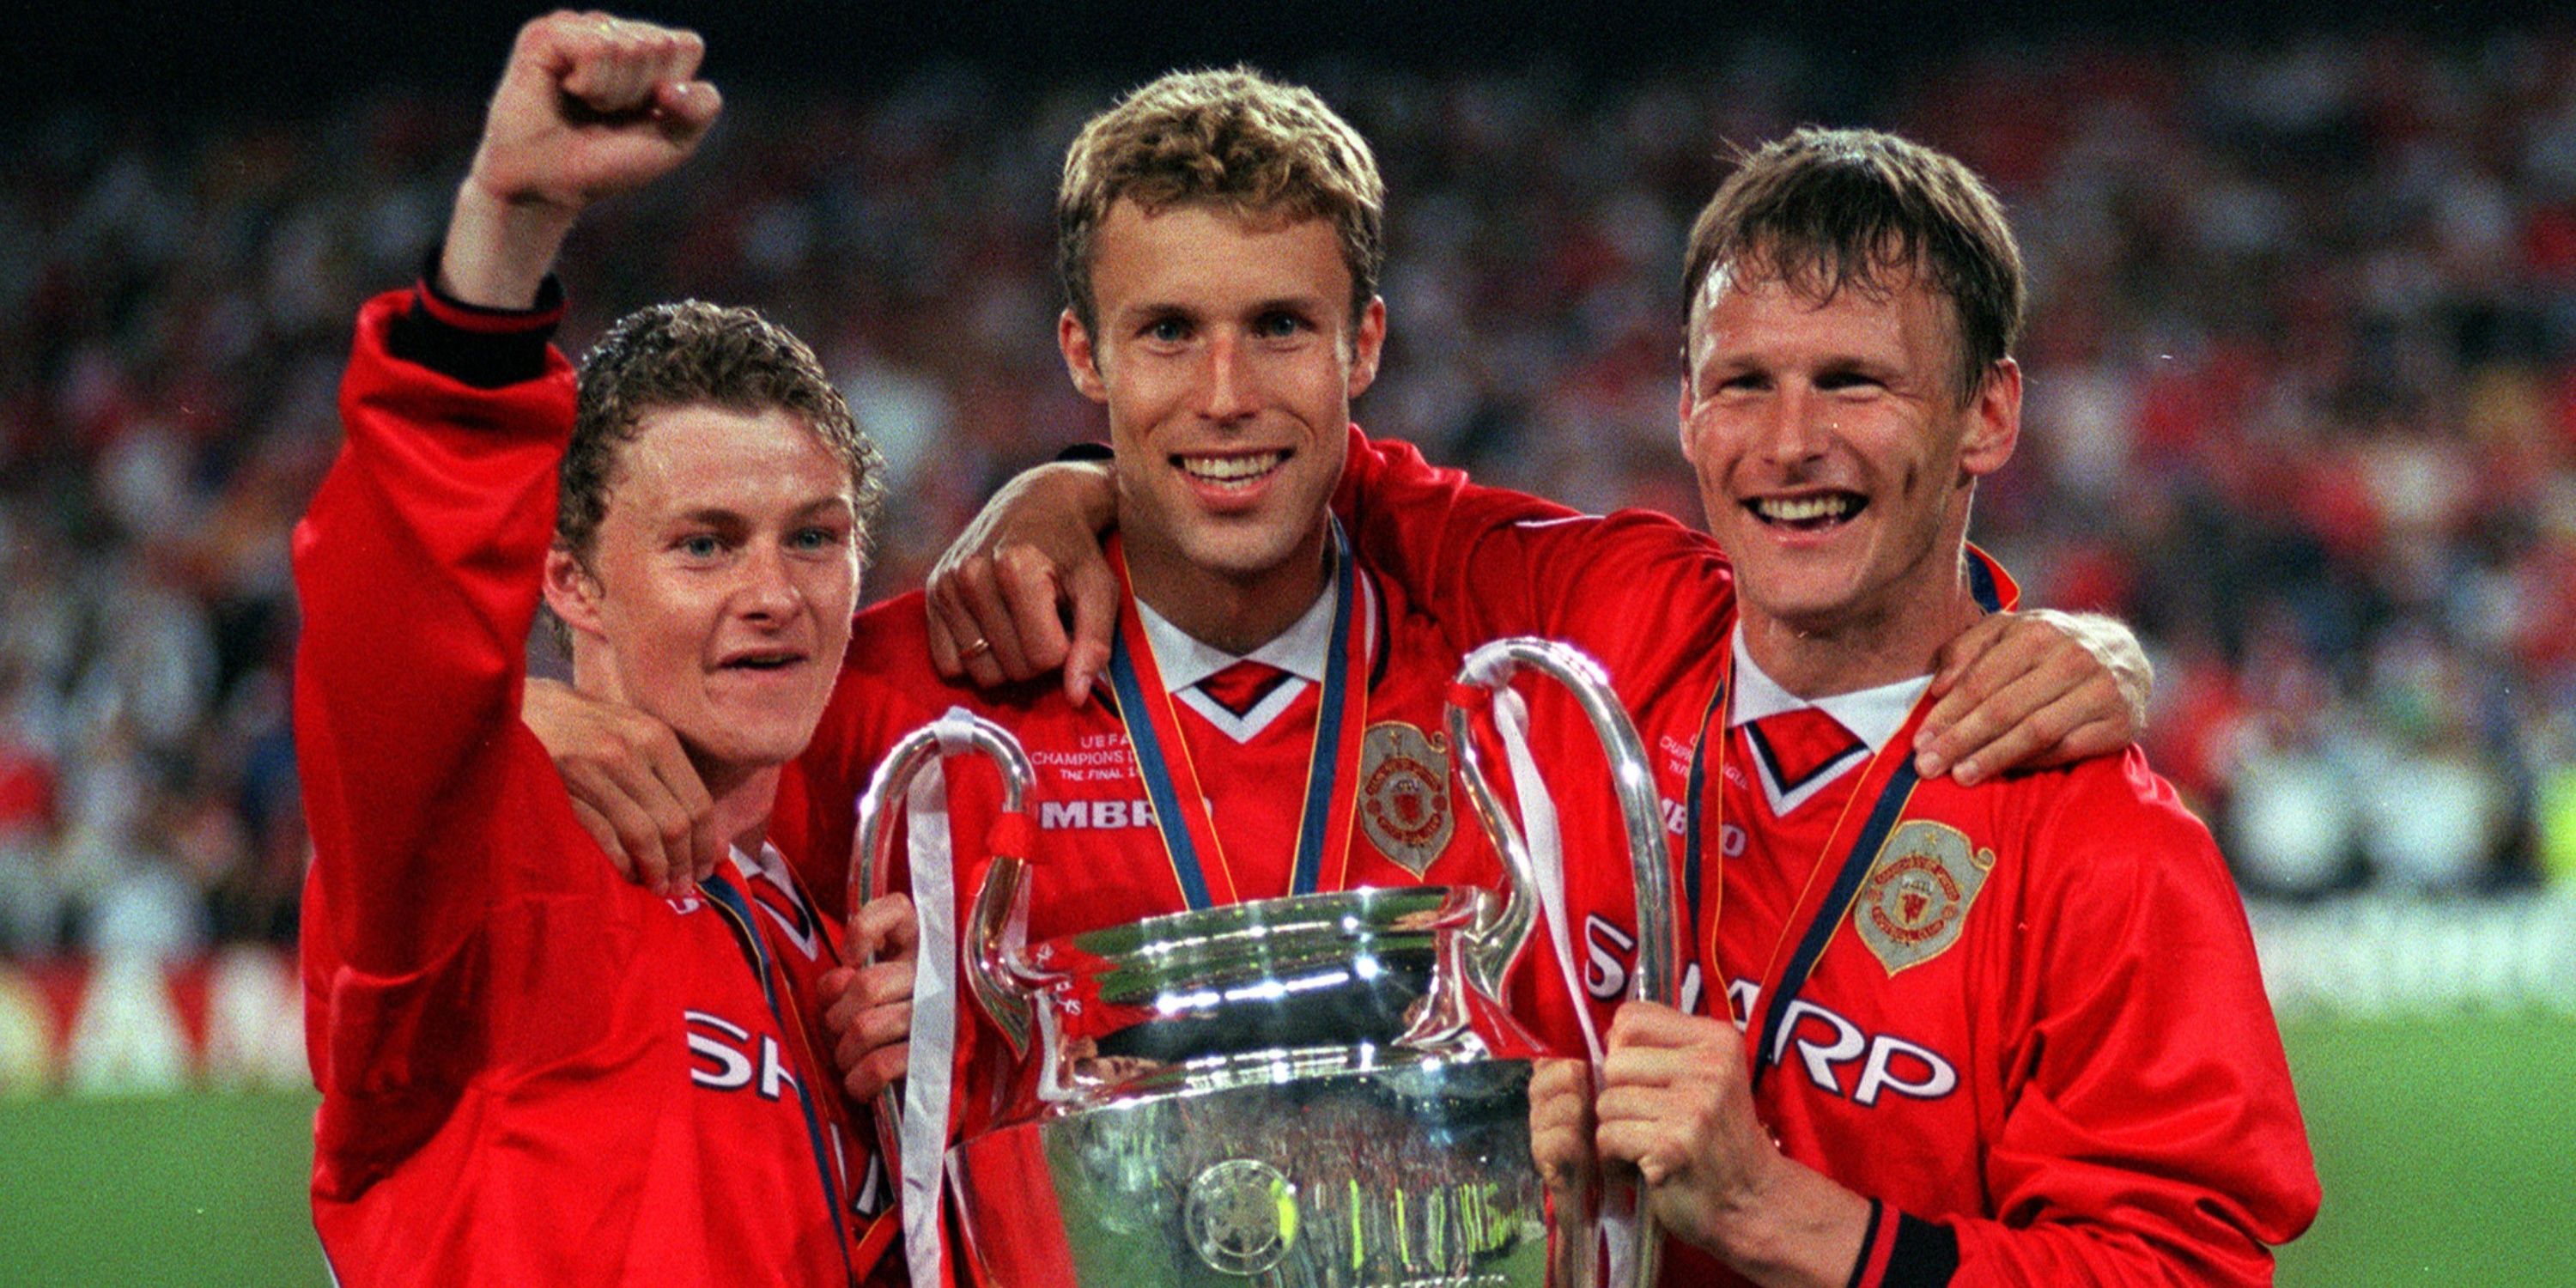 Man Utd players after winning 1999 Champions League final